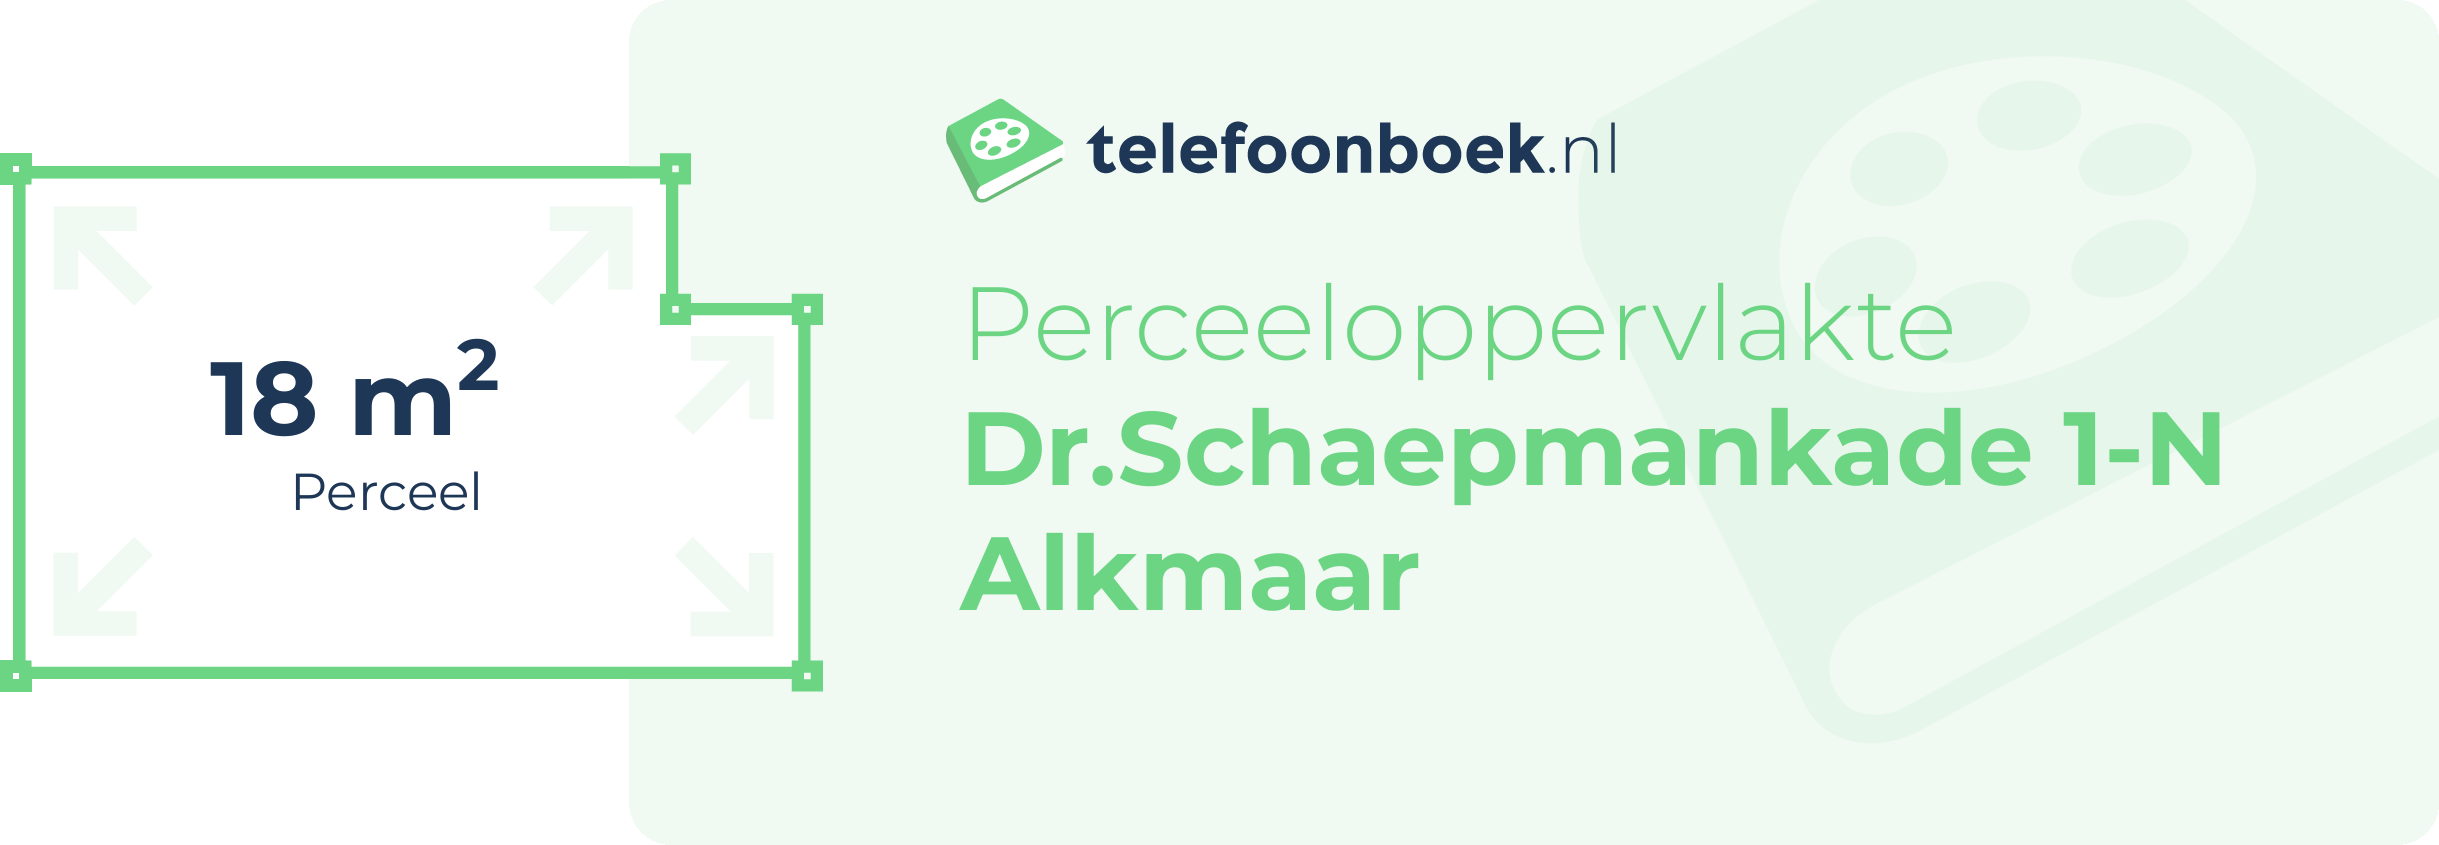 Perceeloppervlakte Dr.Schaepmankade 1-N Alkmaar